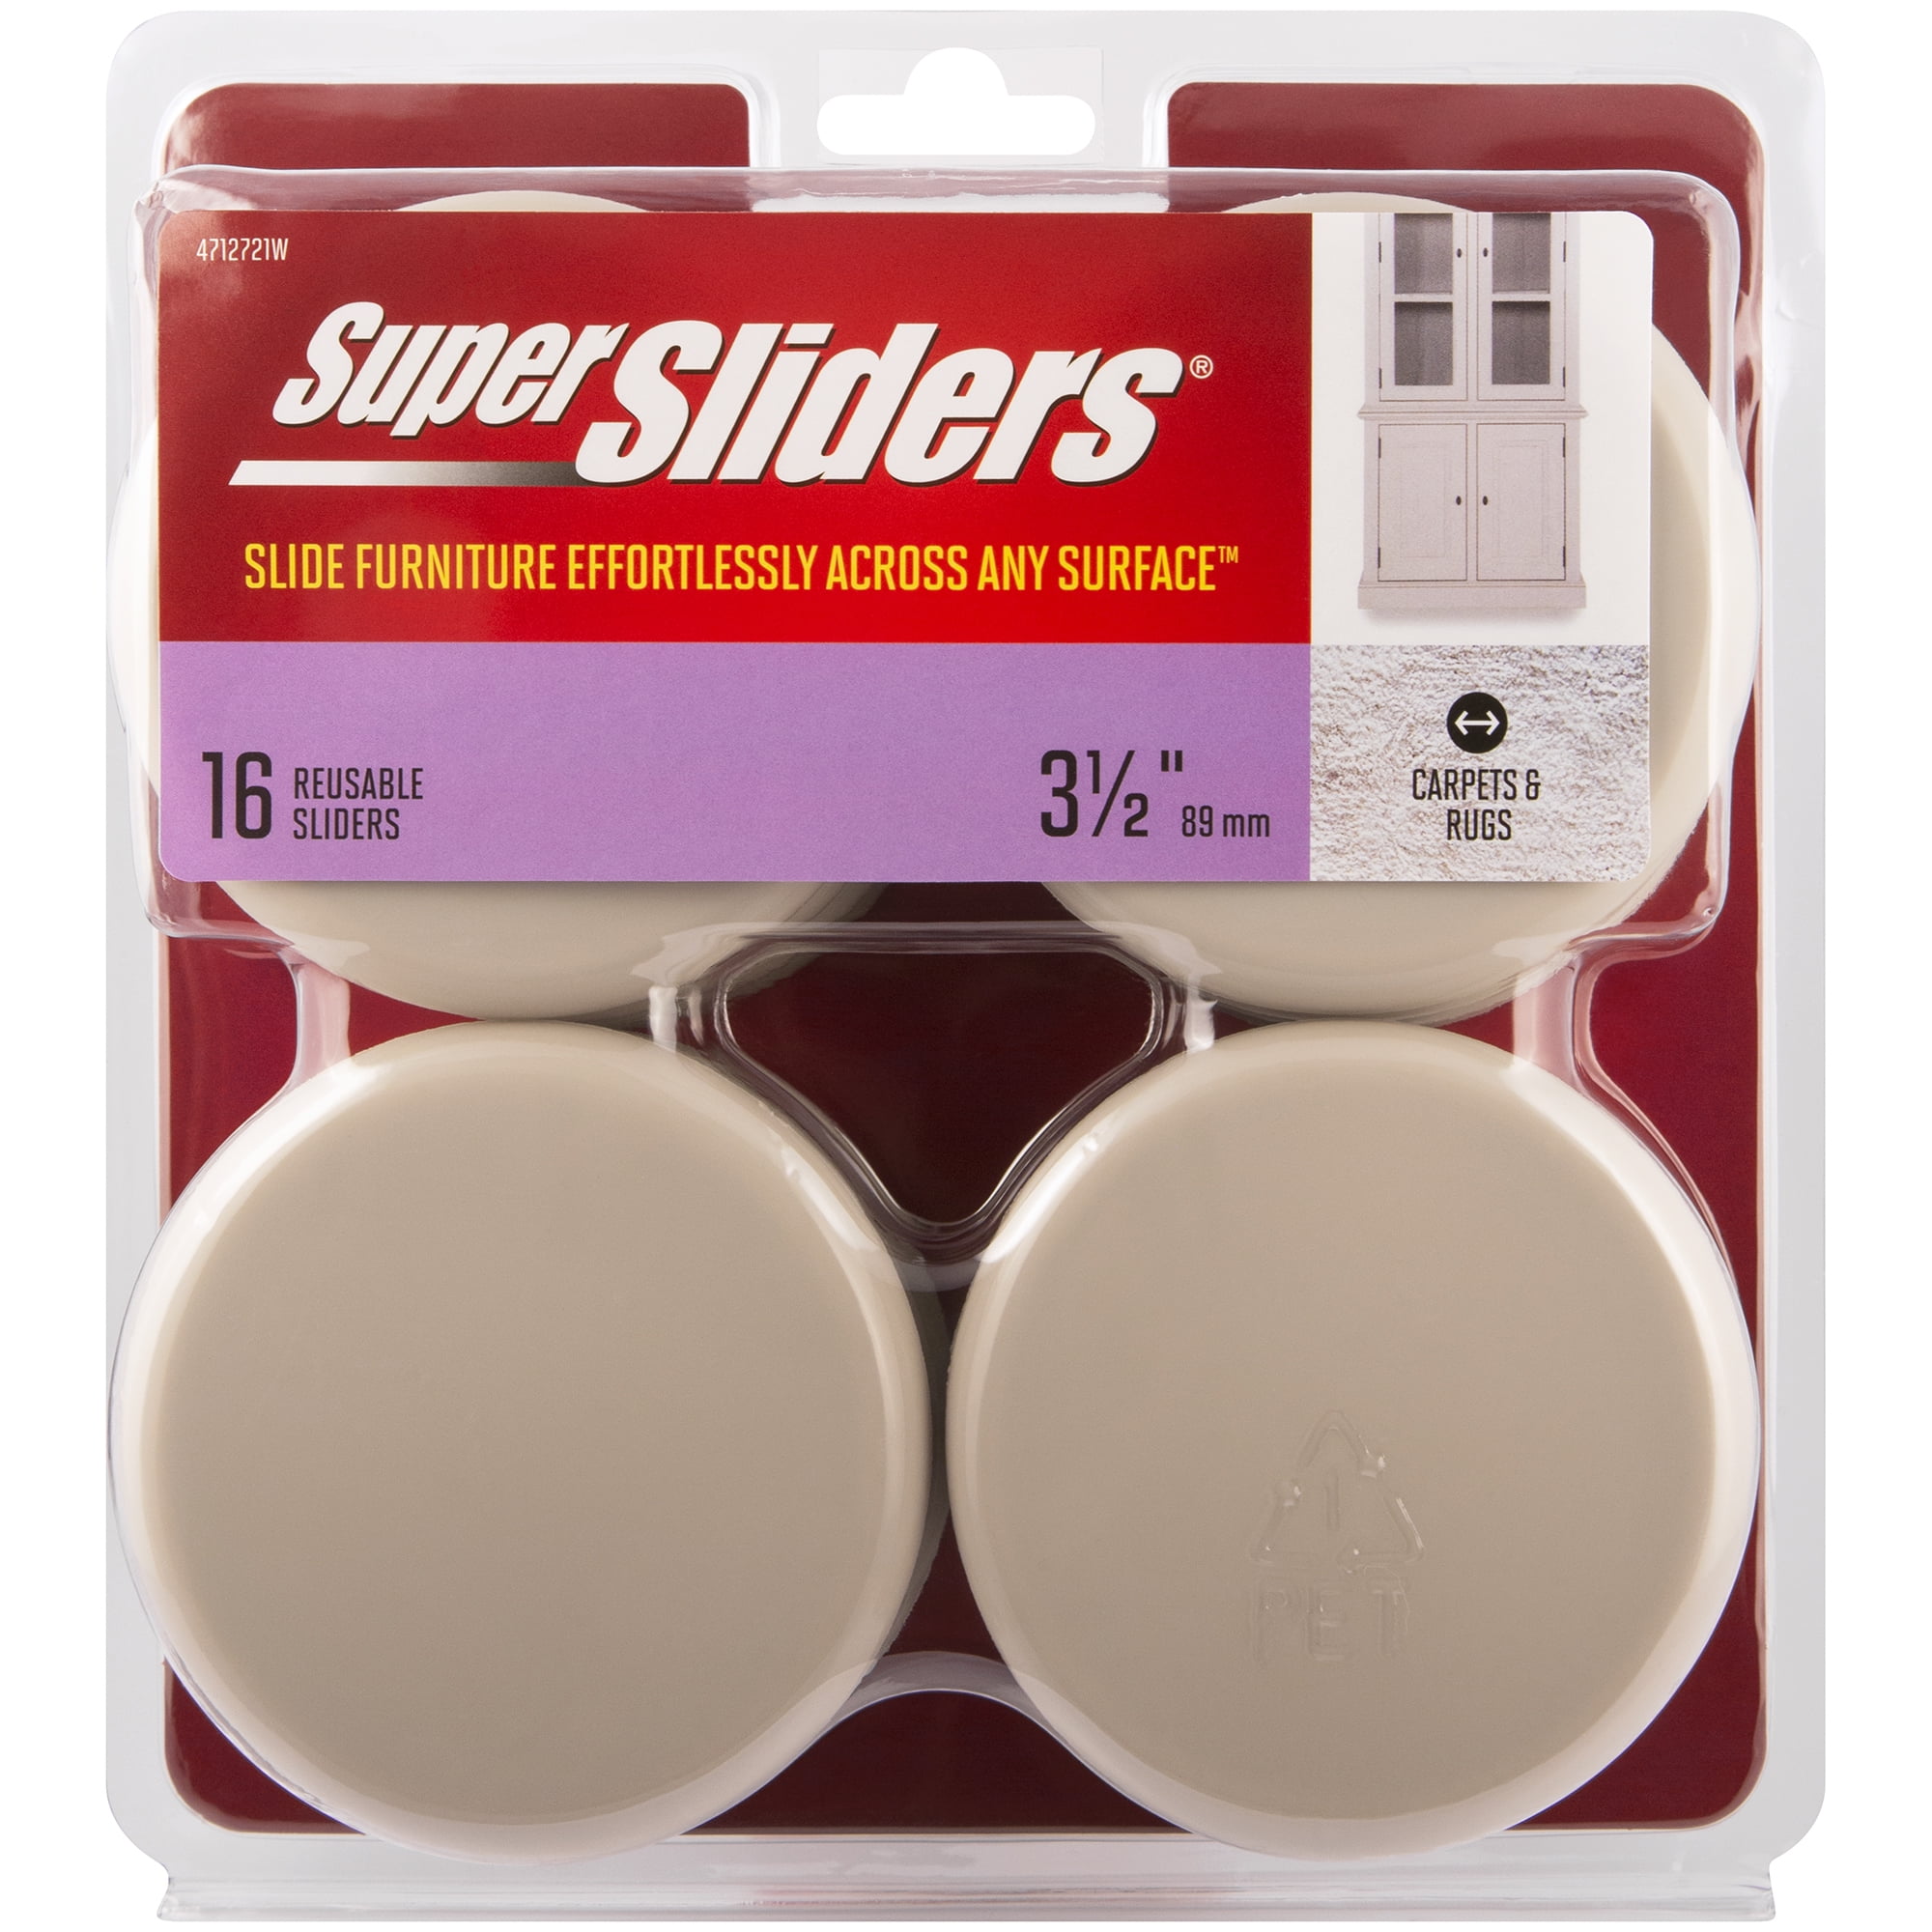 Super Sliders 3-1/2" Round Plastic Furniture Sliders Beige, 16 Pack